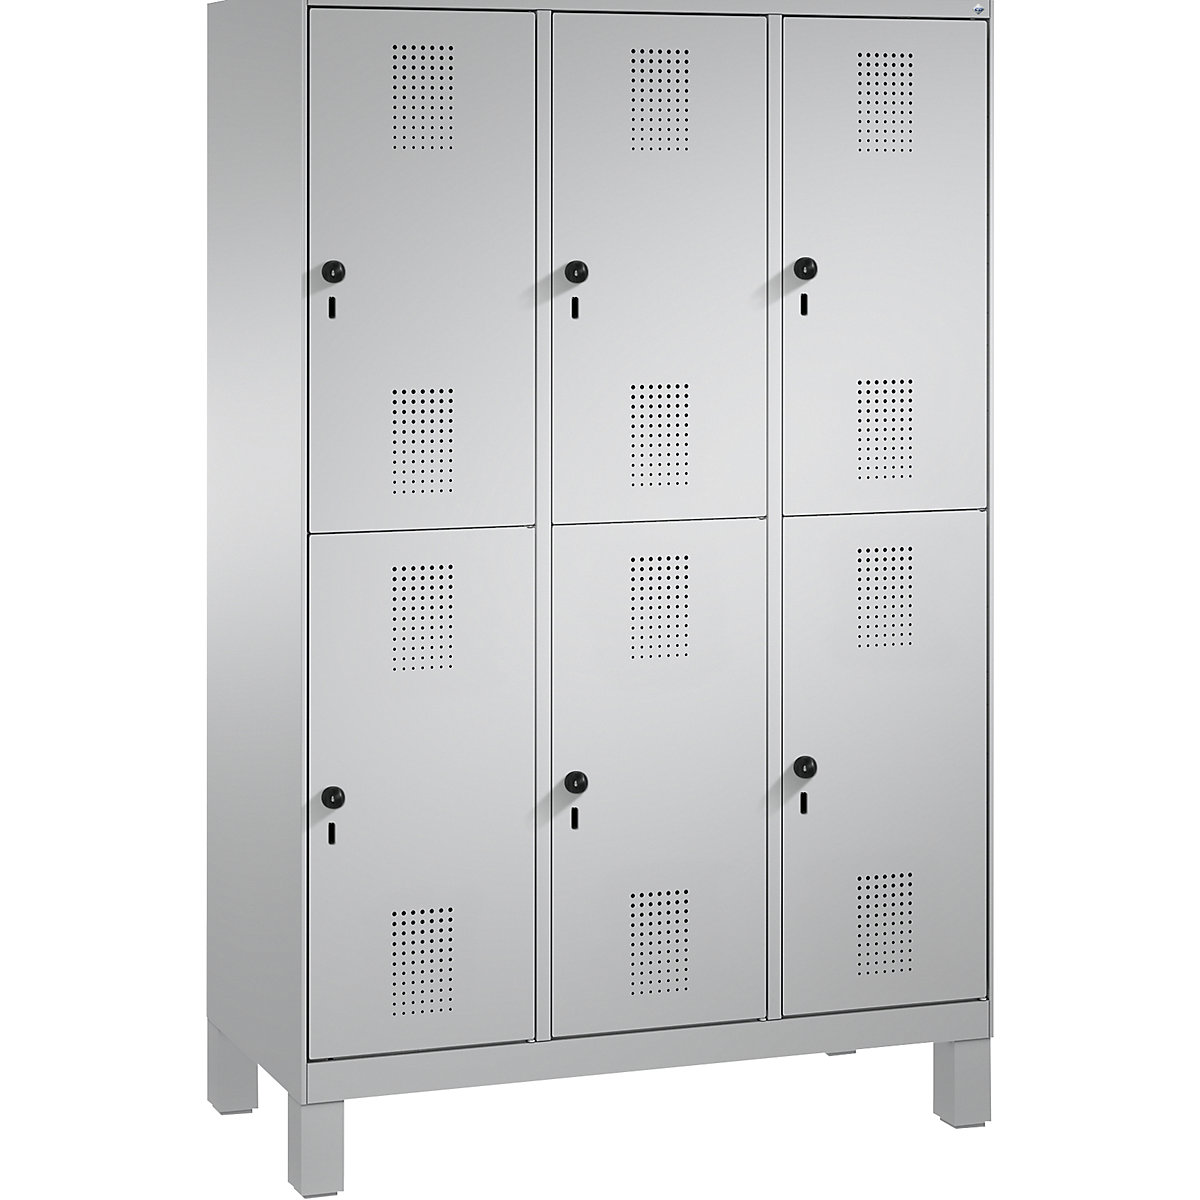 EVOLO cloakroom locker, double tier, with feet – C+P, 3 compartments, 2 shelf compartments each, compartment width 400 mm, white aluminium / white aluminium-7